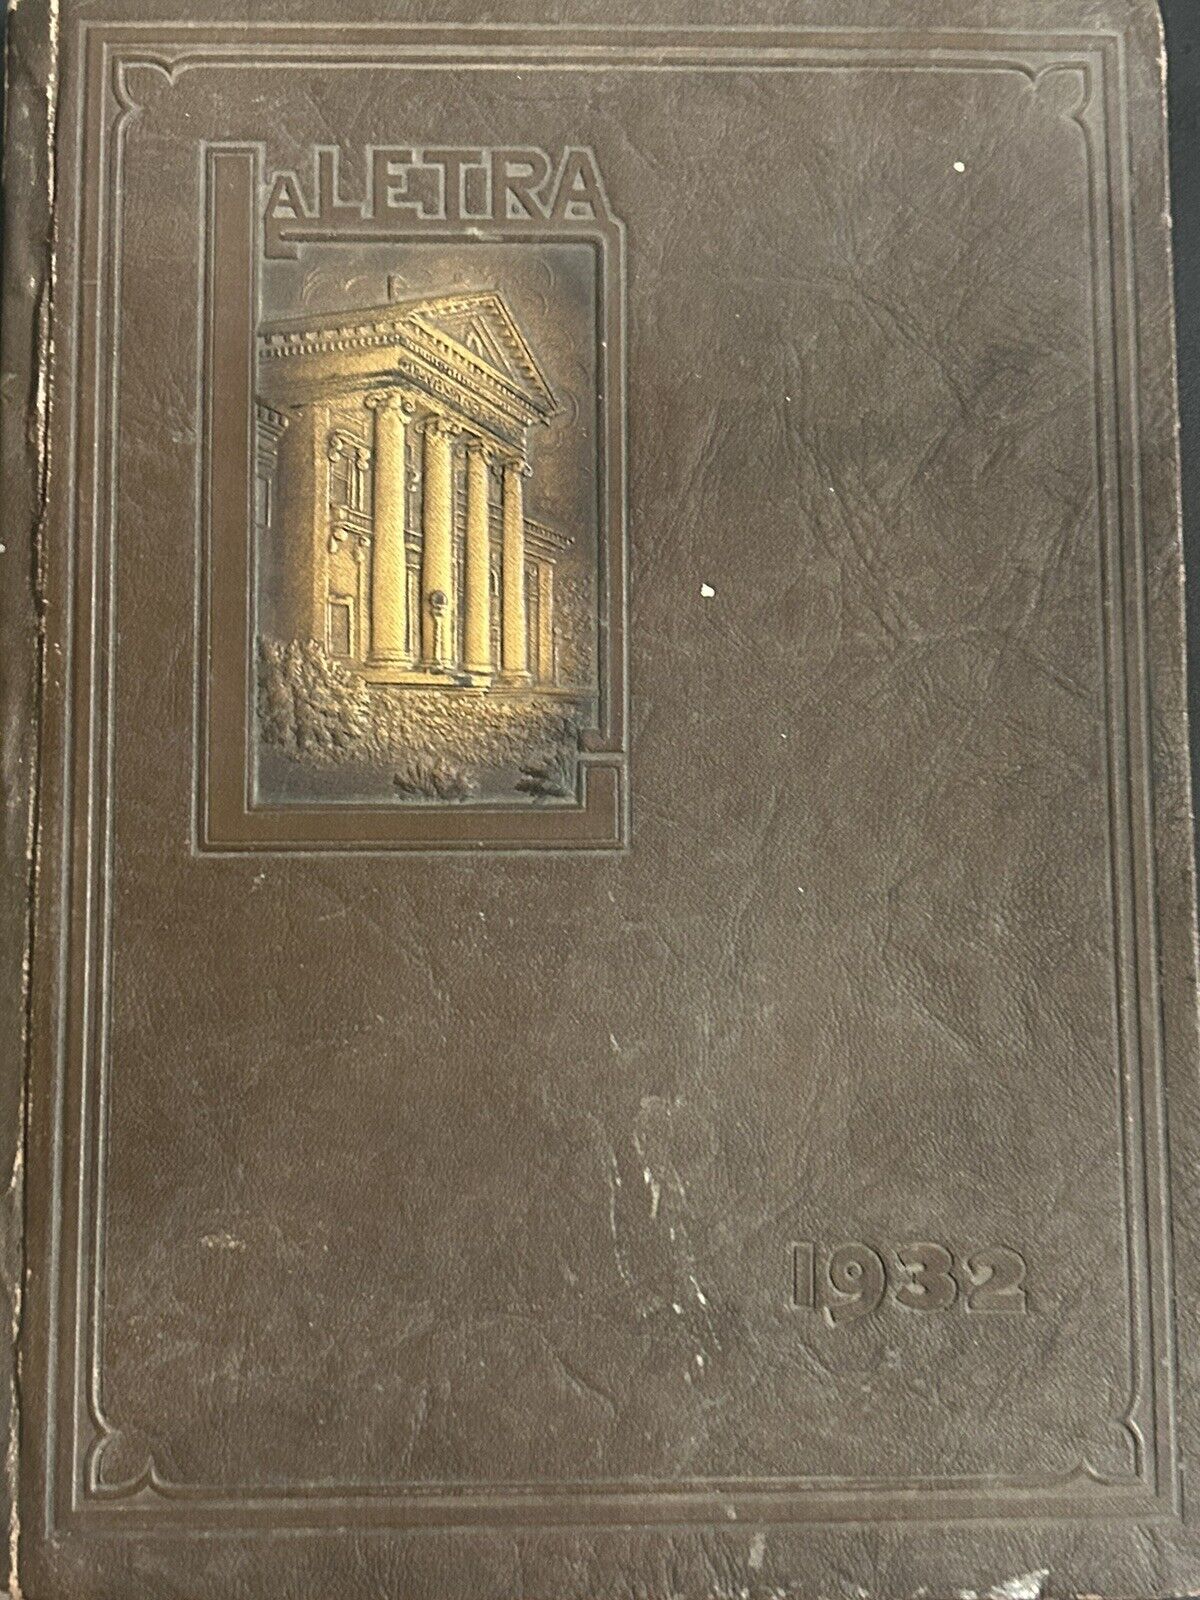 THE UNIVERSITY OF REDLANDS 1932 LA LETRA VINTAGE YEARBOOK